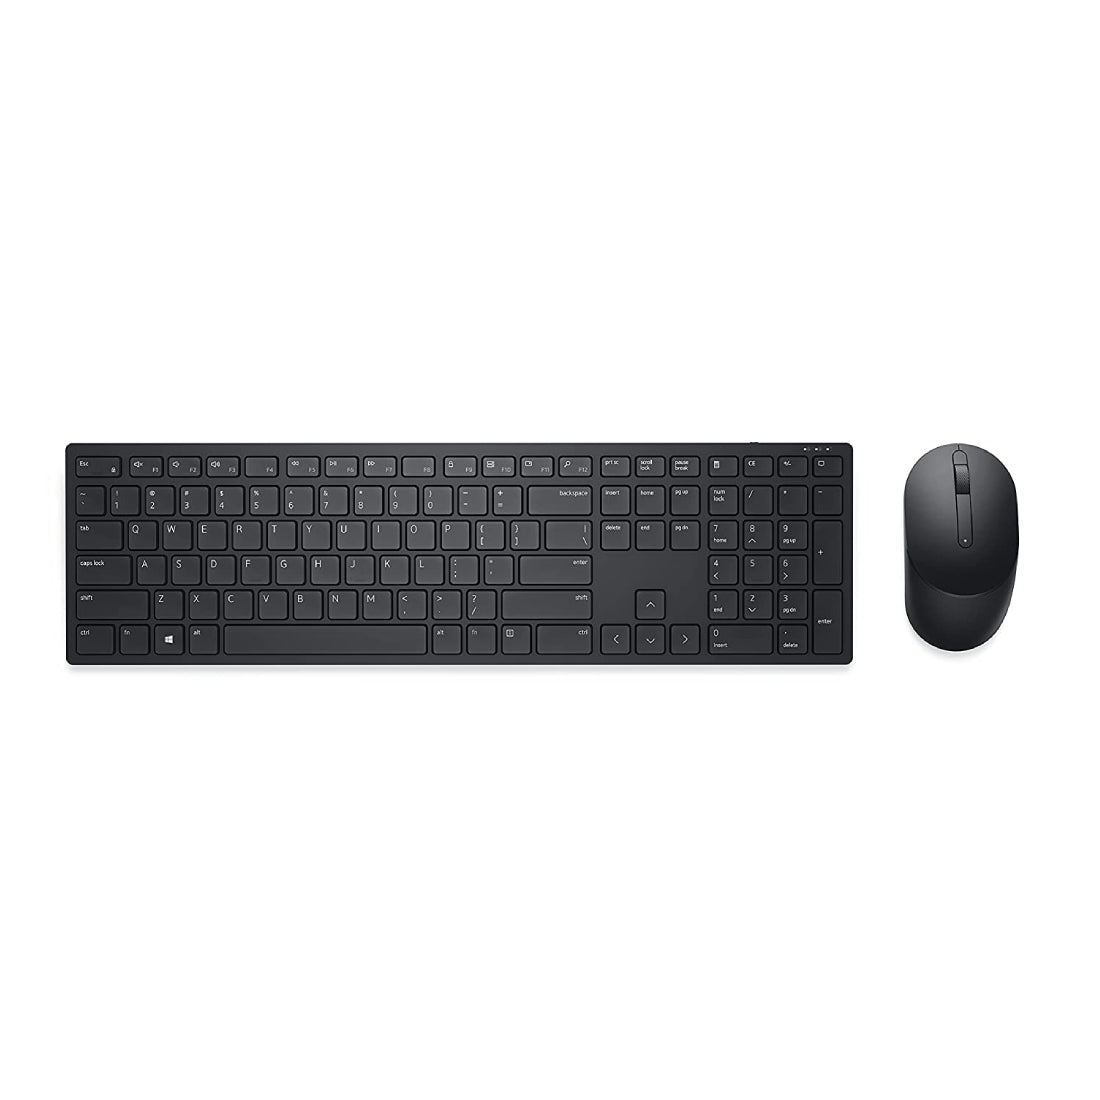 Dell KM5221W Pro Wireless Keyboard and Mouse - Black - كييبورد و فأرة - Store 974 | ستور ٩٧٤